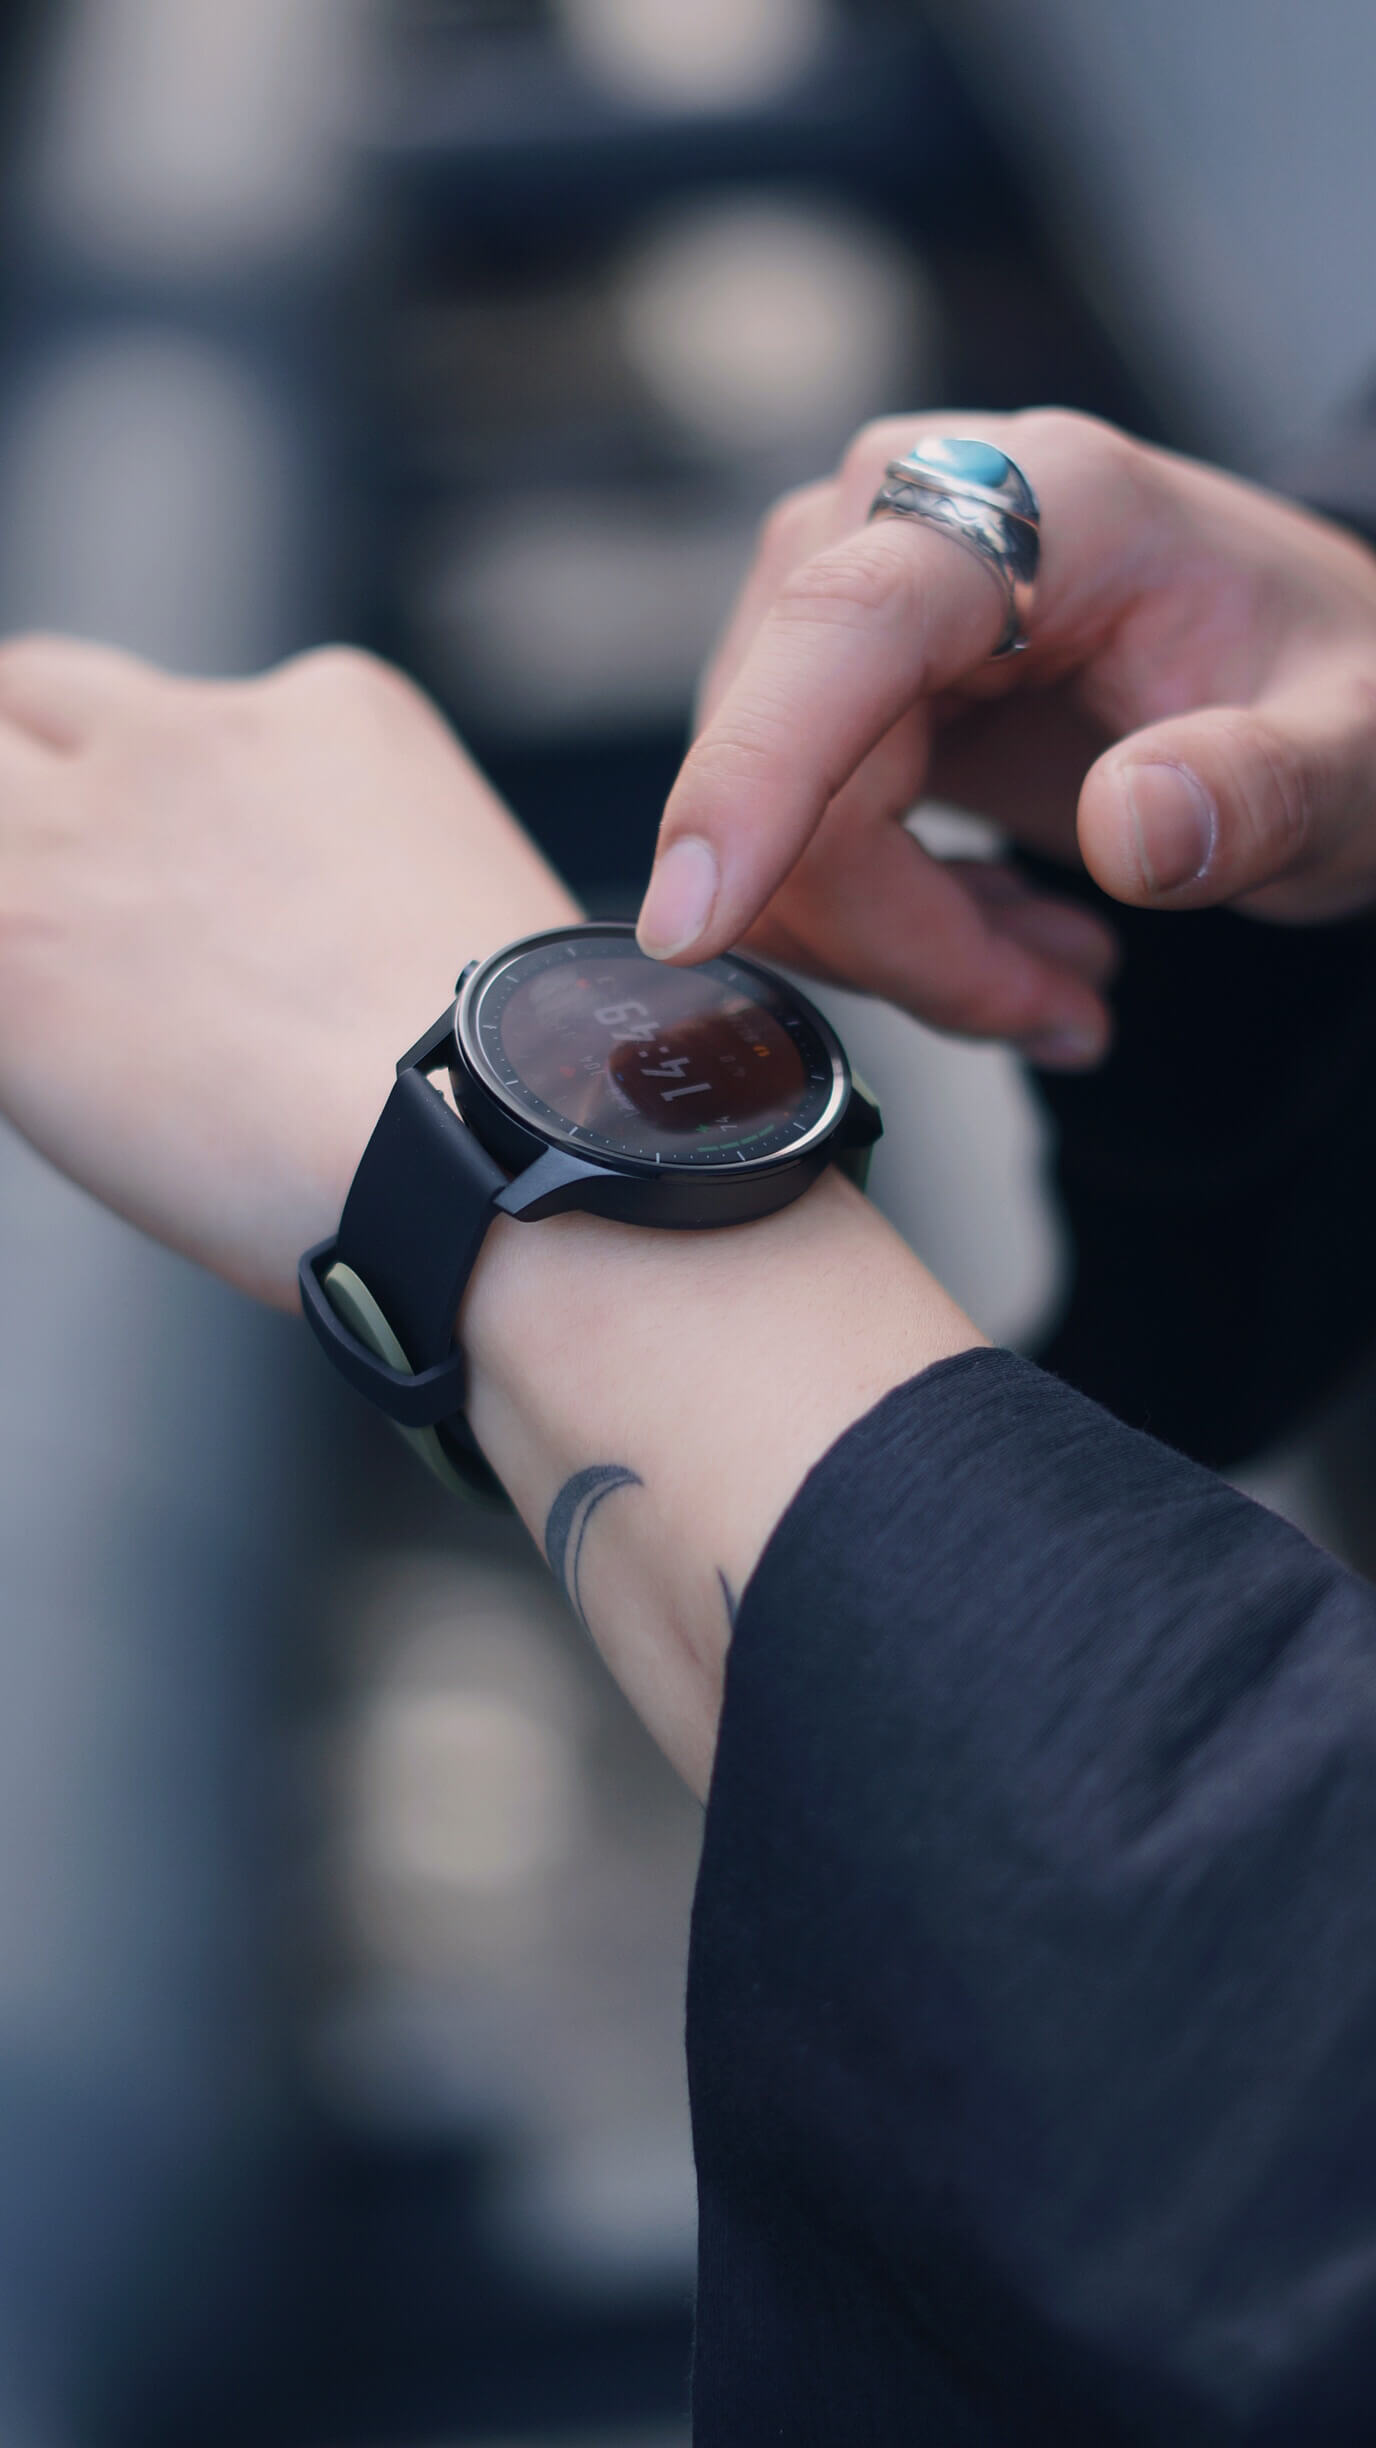 Xiaomi watch ru. Xiaomi watch Color. Часы Xiaomi mi watch Color. Xiaomi mi watch на руке. Умные часы круглые на мужской руке.